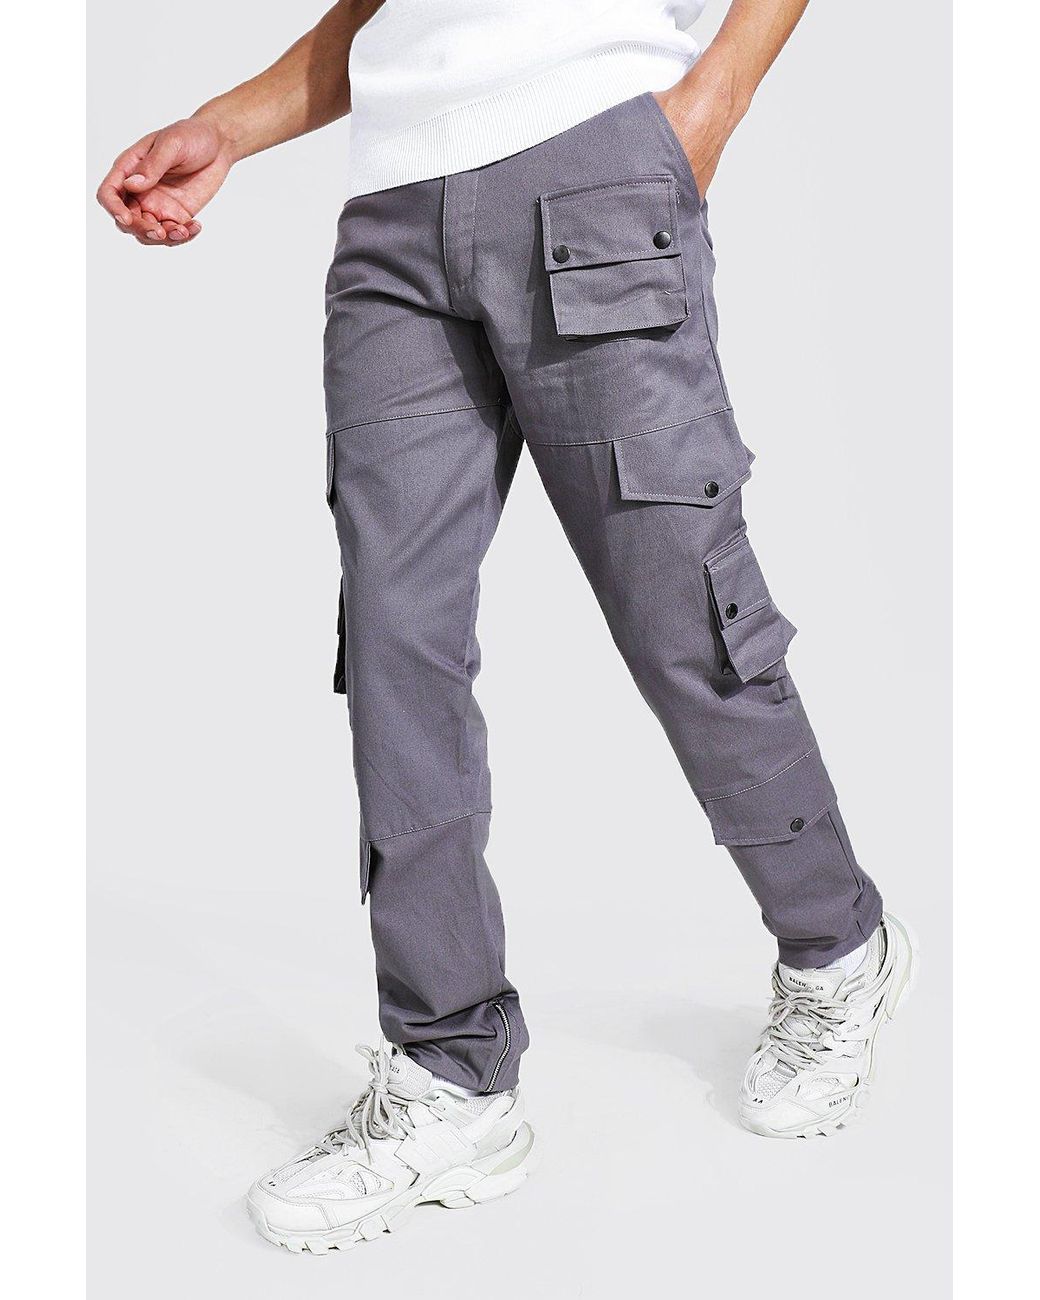 union bay grey cargo pants - size 5 but fits... - Depop